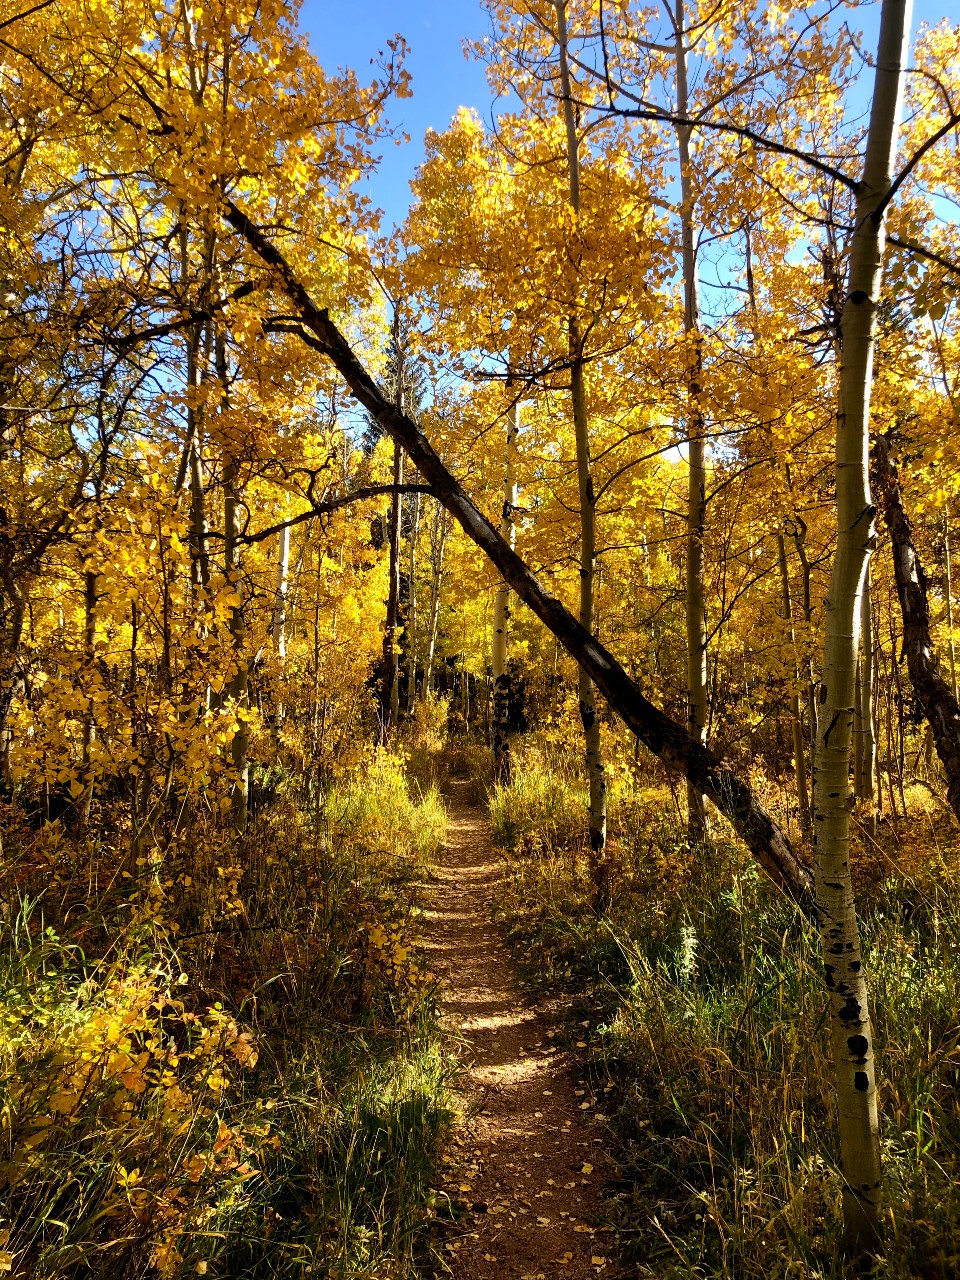 an autumn path with climbing orange trees